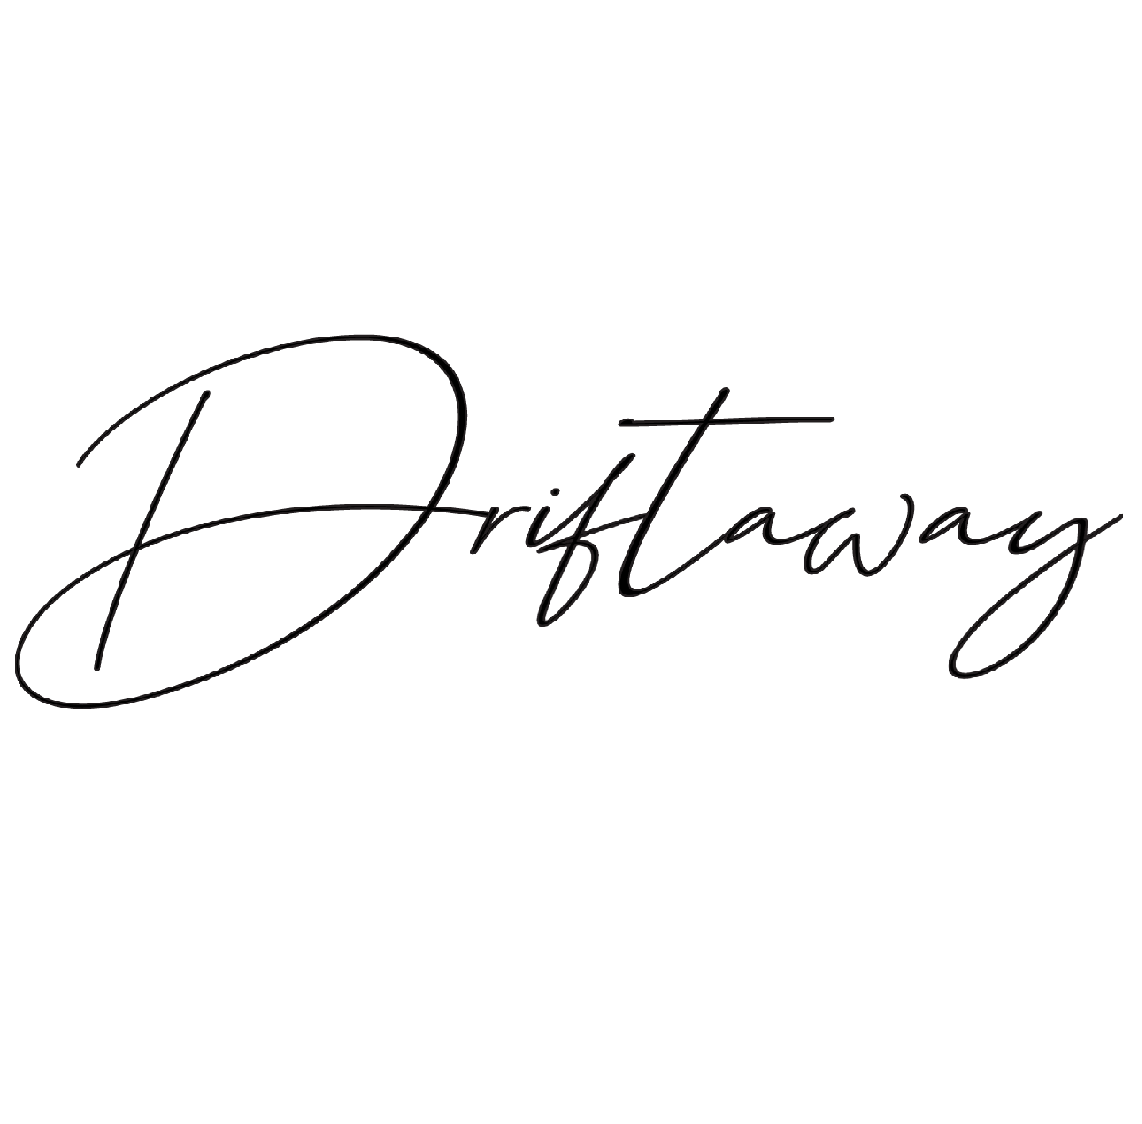 Driftaway Coffee logo